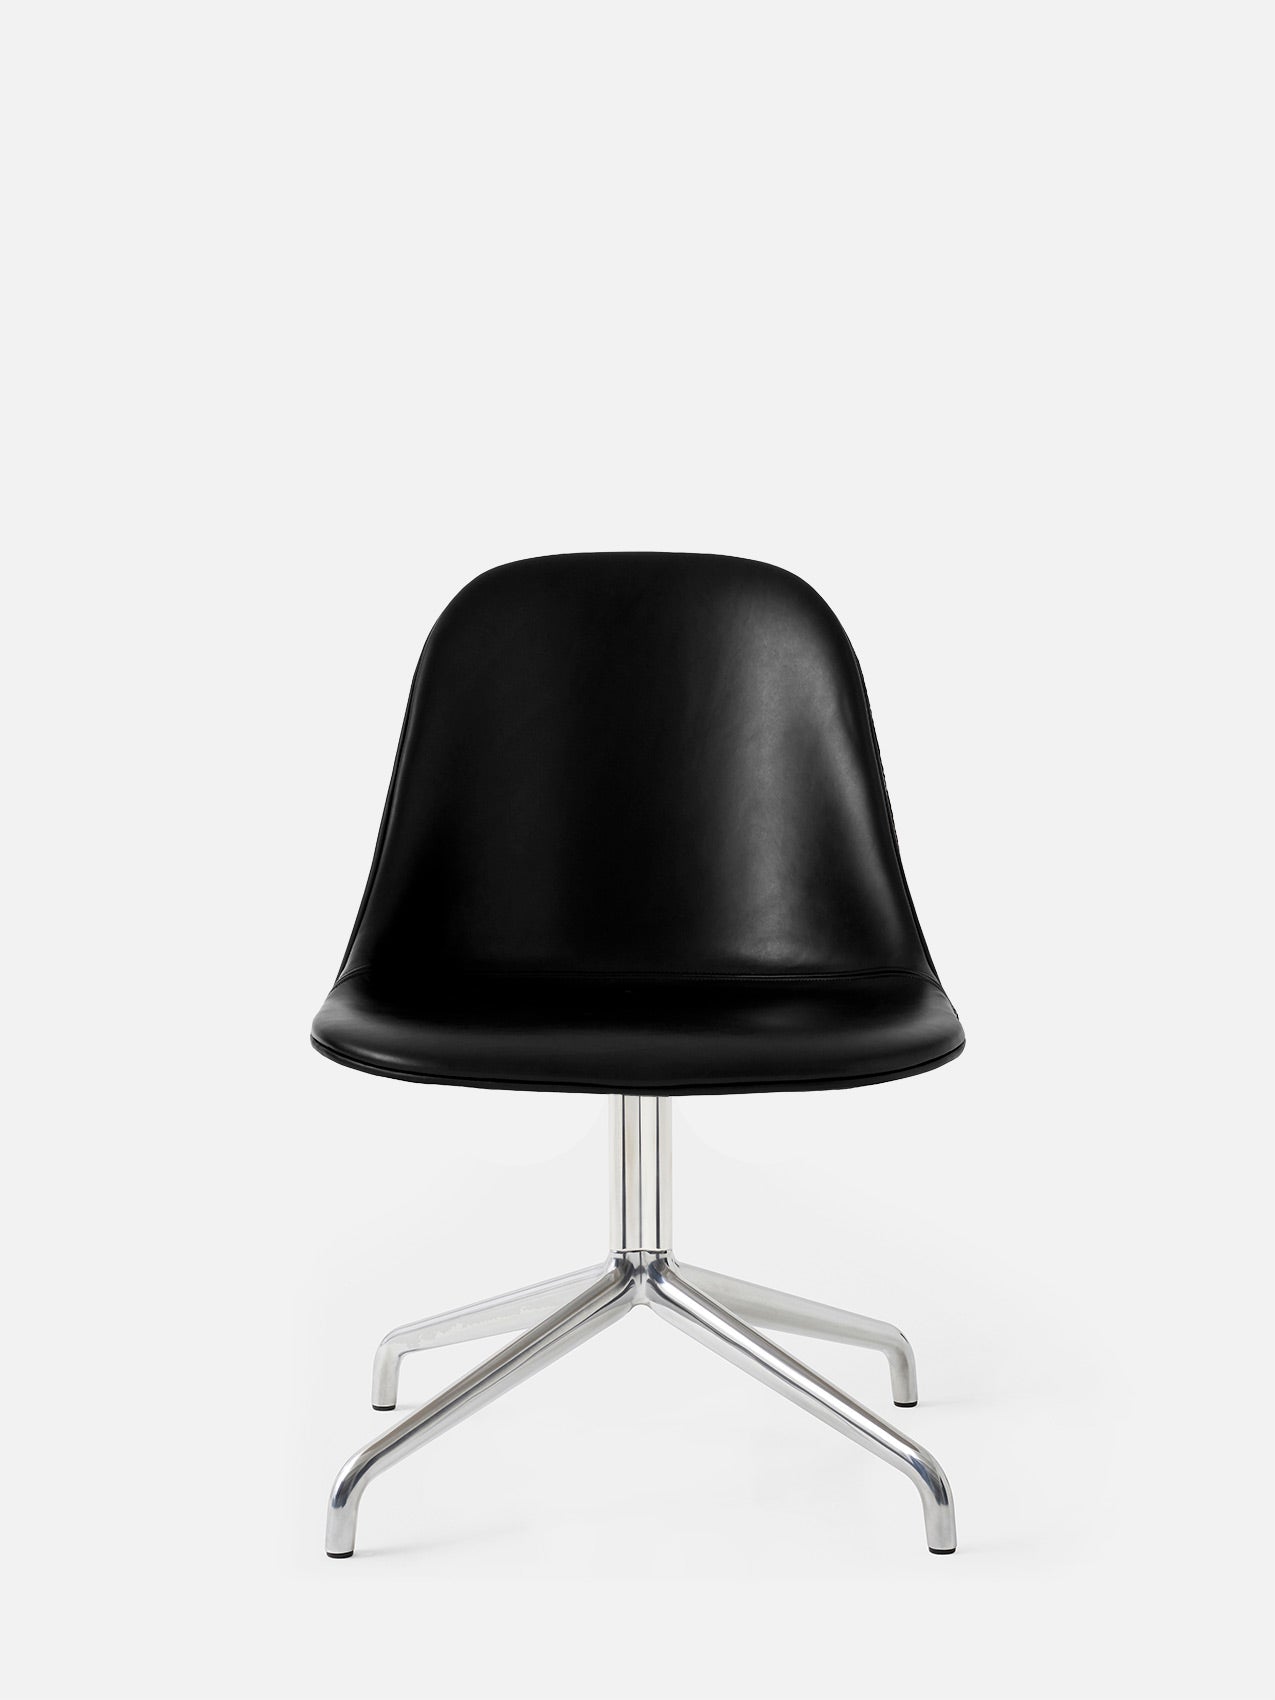 Harbour Side Chair, Upholstered-Chair-Norm Architects-Star Base (Seat 17.7in H)/Polished Aluminum-0842 Black/Dakar-menu-minimalist-modern-danish-design-home-decor